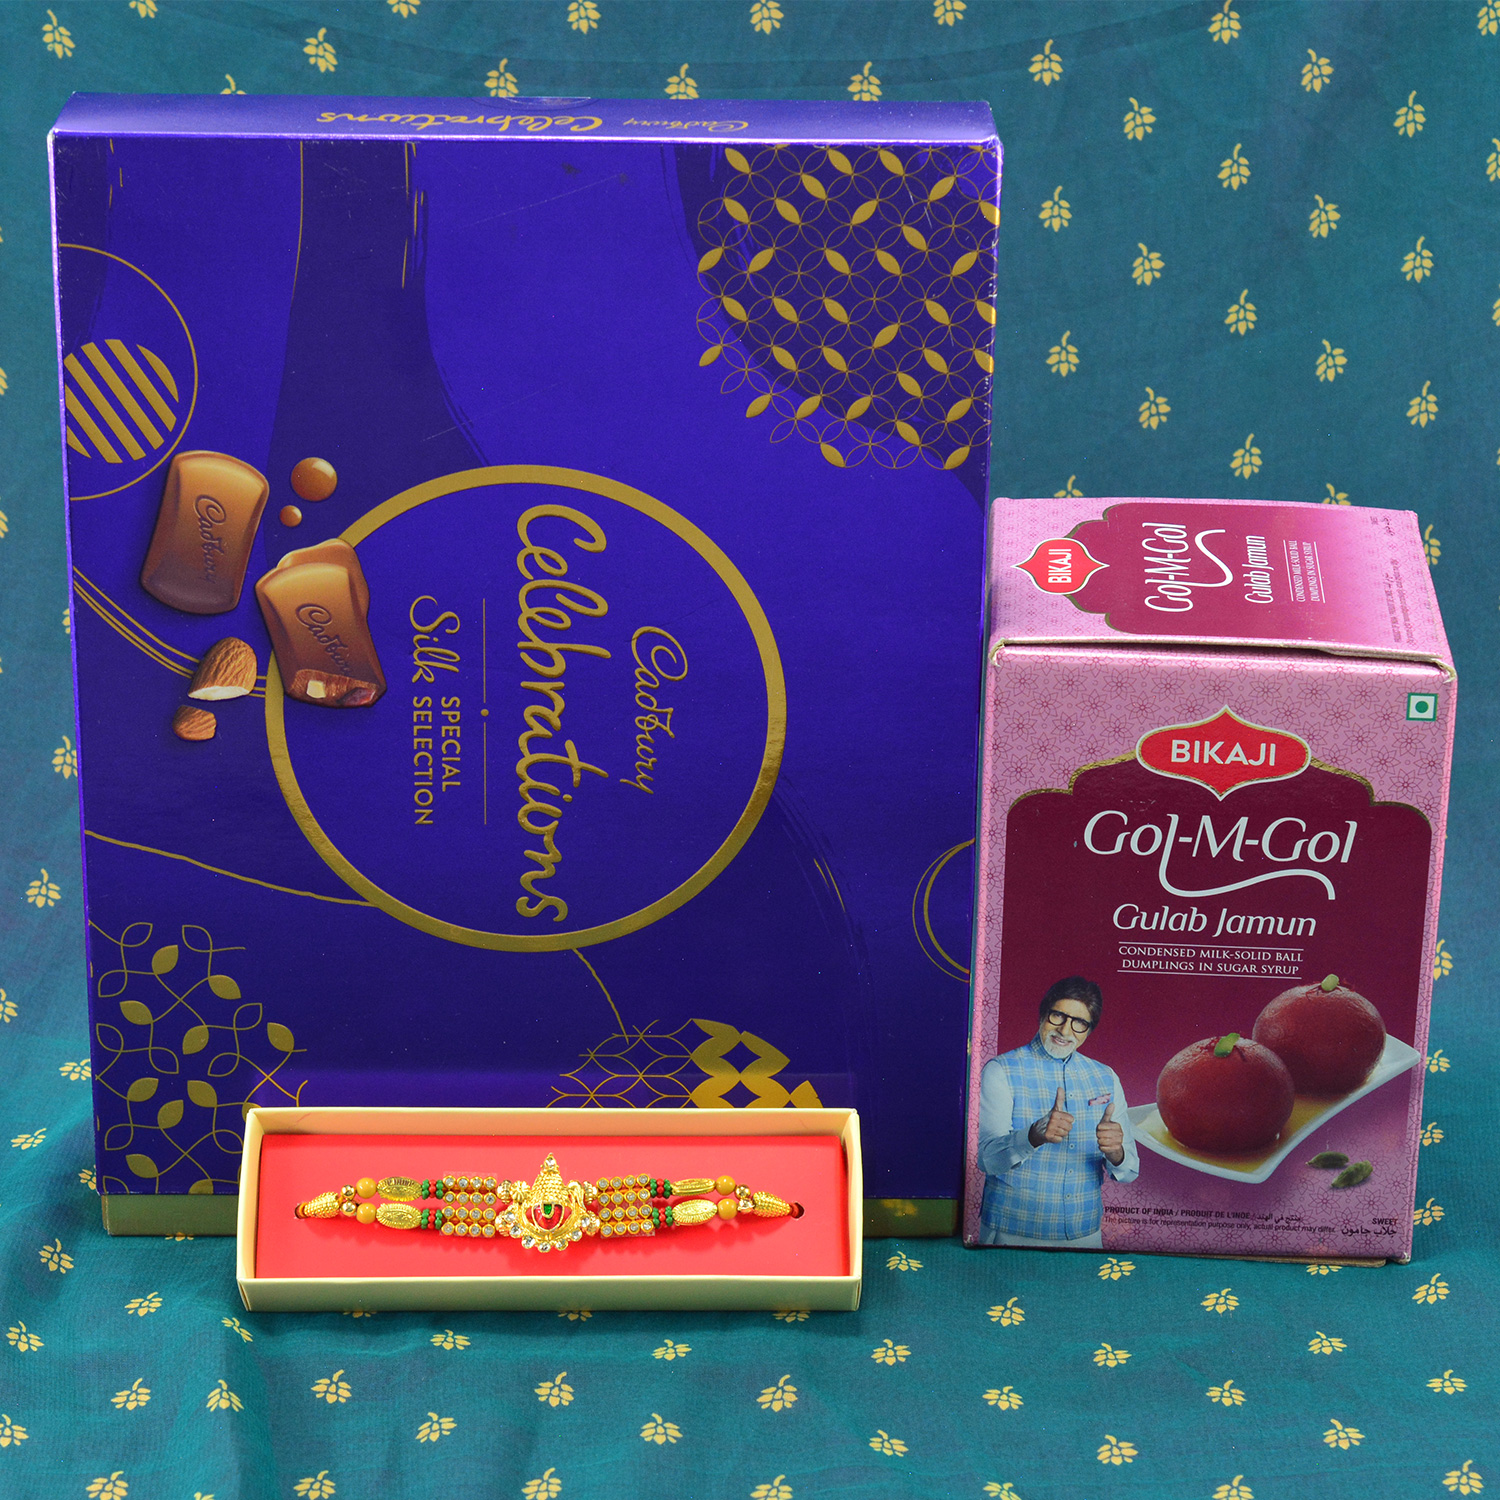 Marvellous Jewel Rakhi wtih mouthwatering Bikaji Gol Matol Gulab Jamun and luscious Cadbury Celebrations